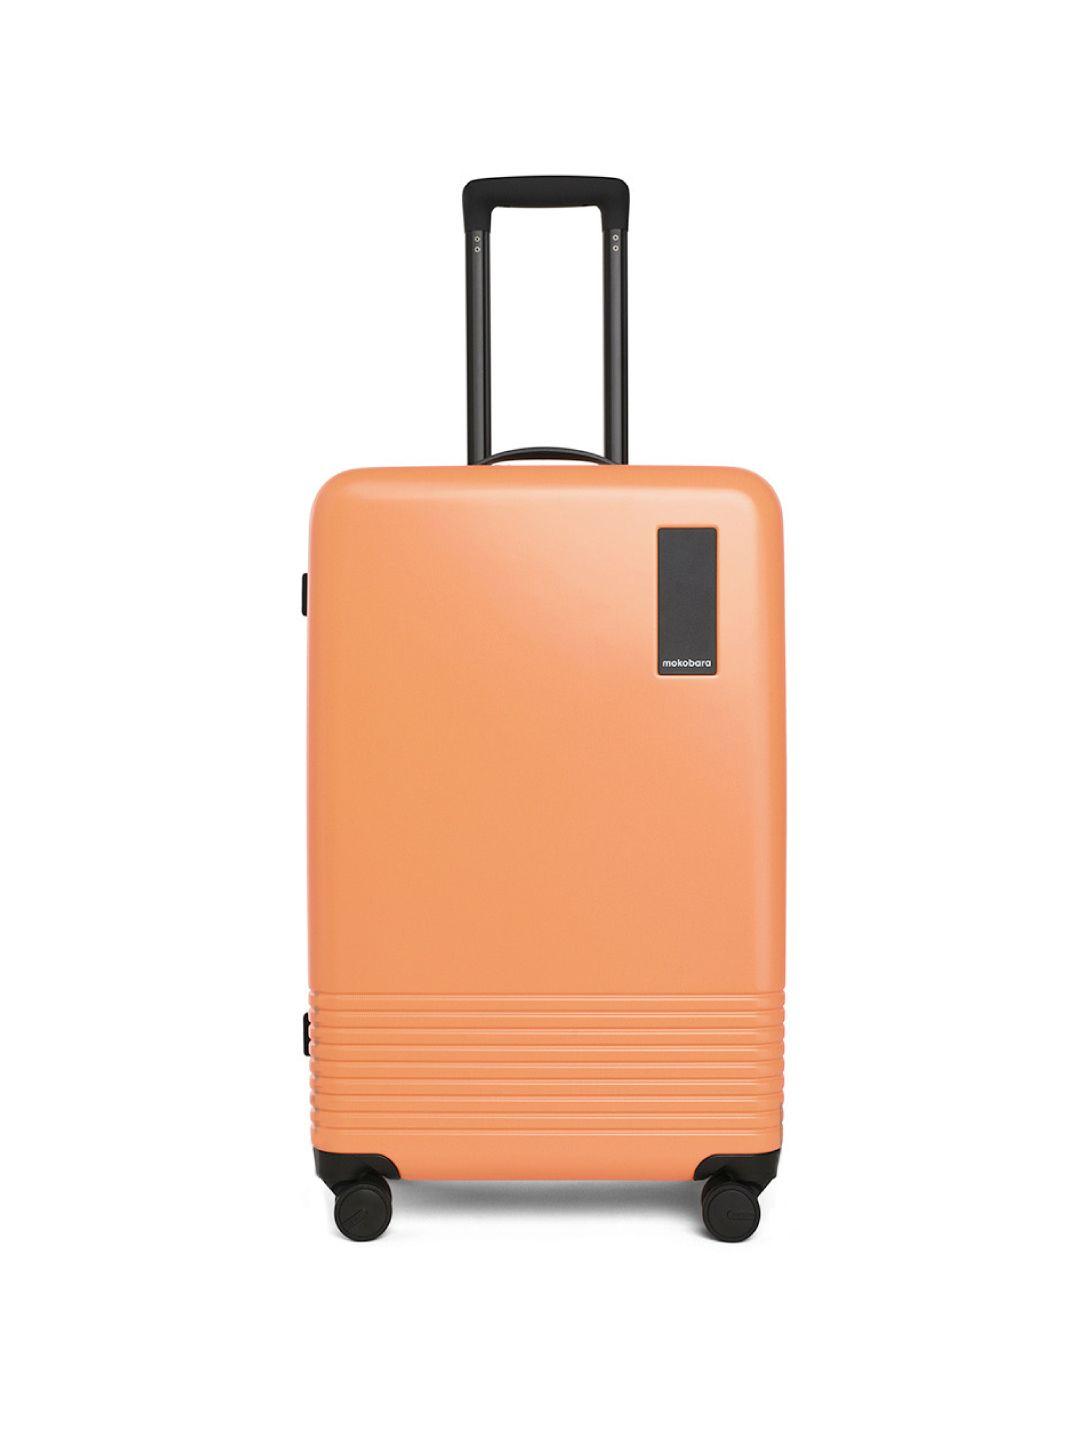 mokobara hard-sided medium trolley suitcase